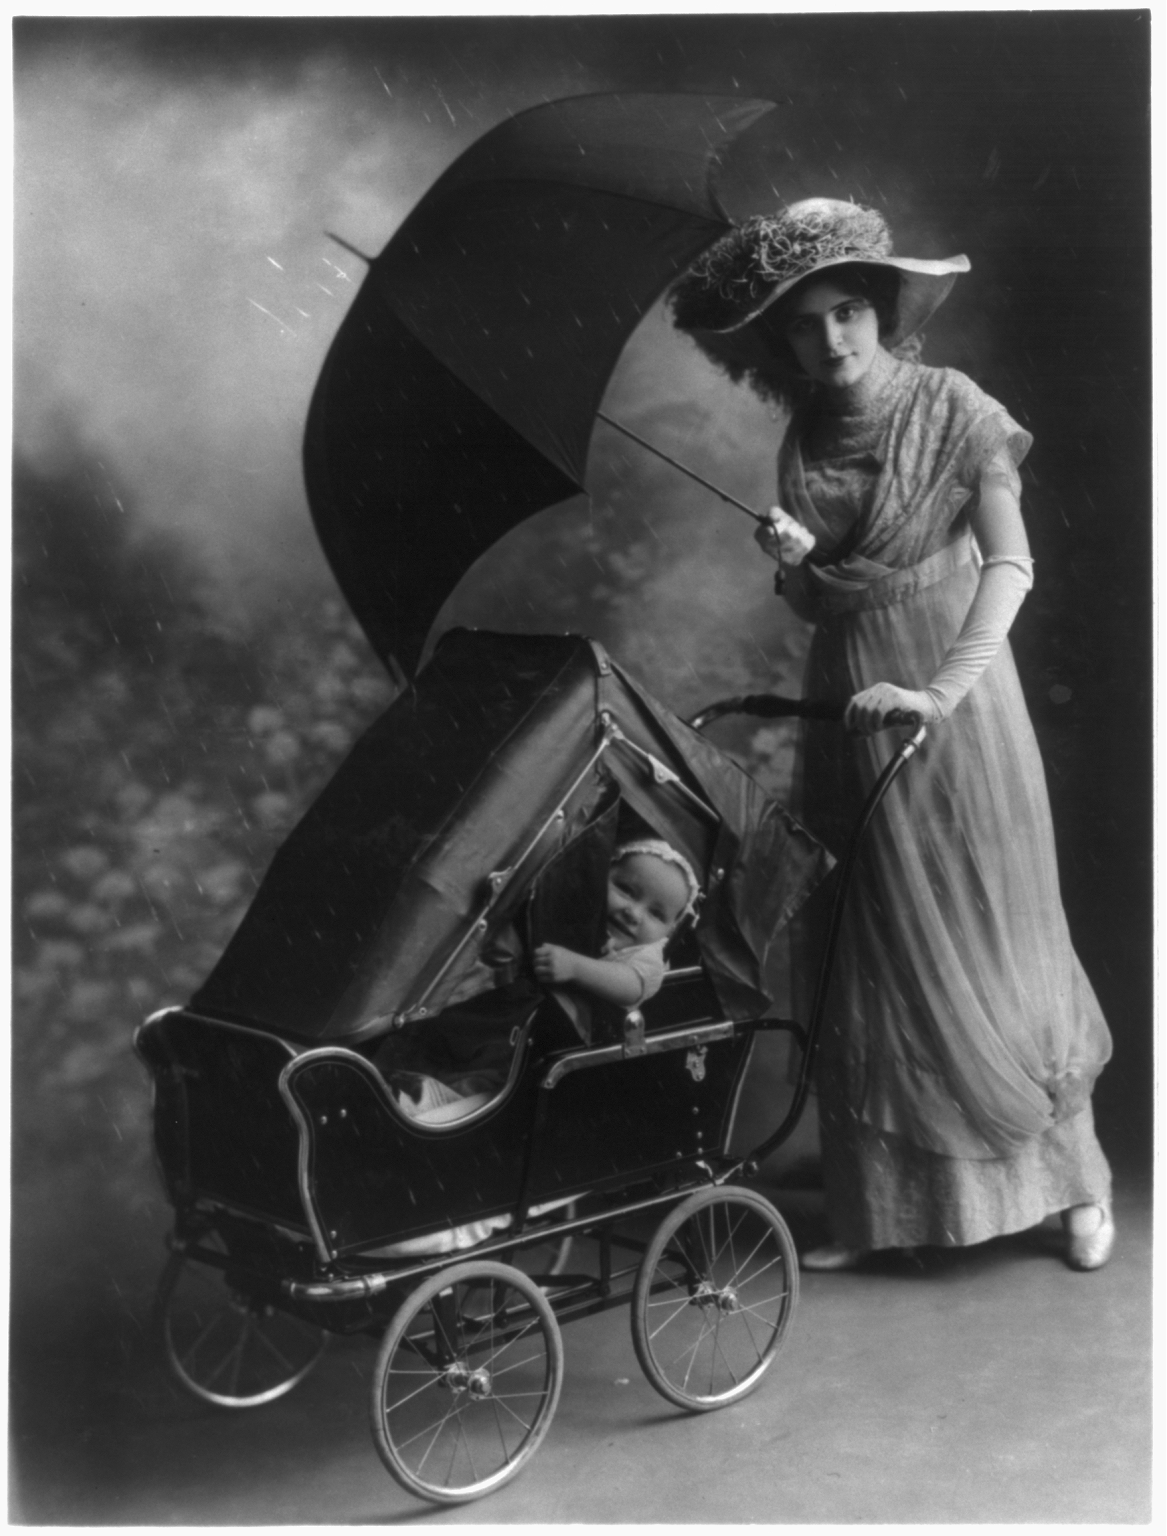 1800 baby stroller